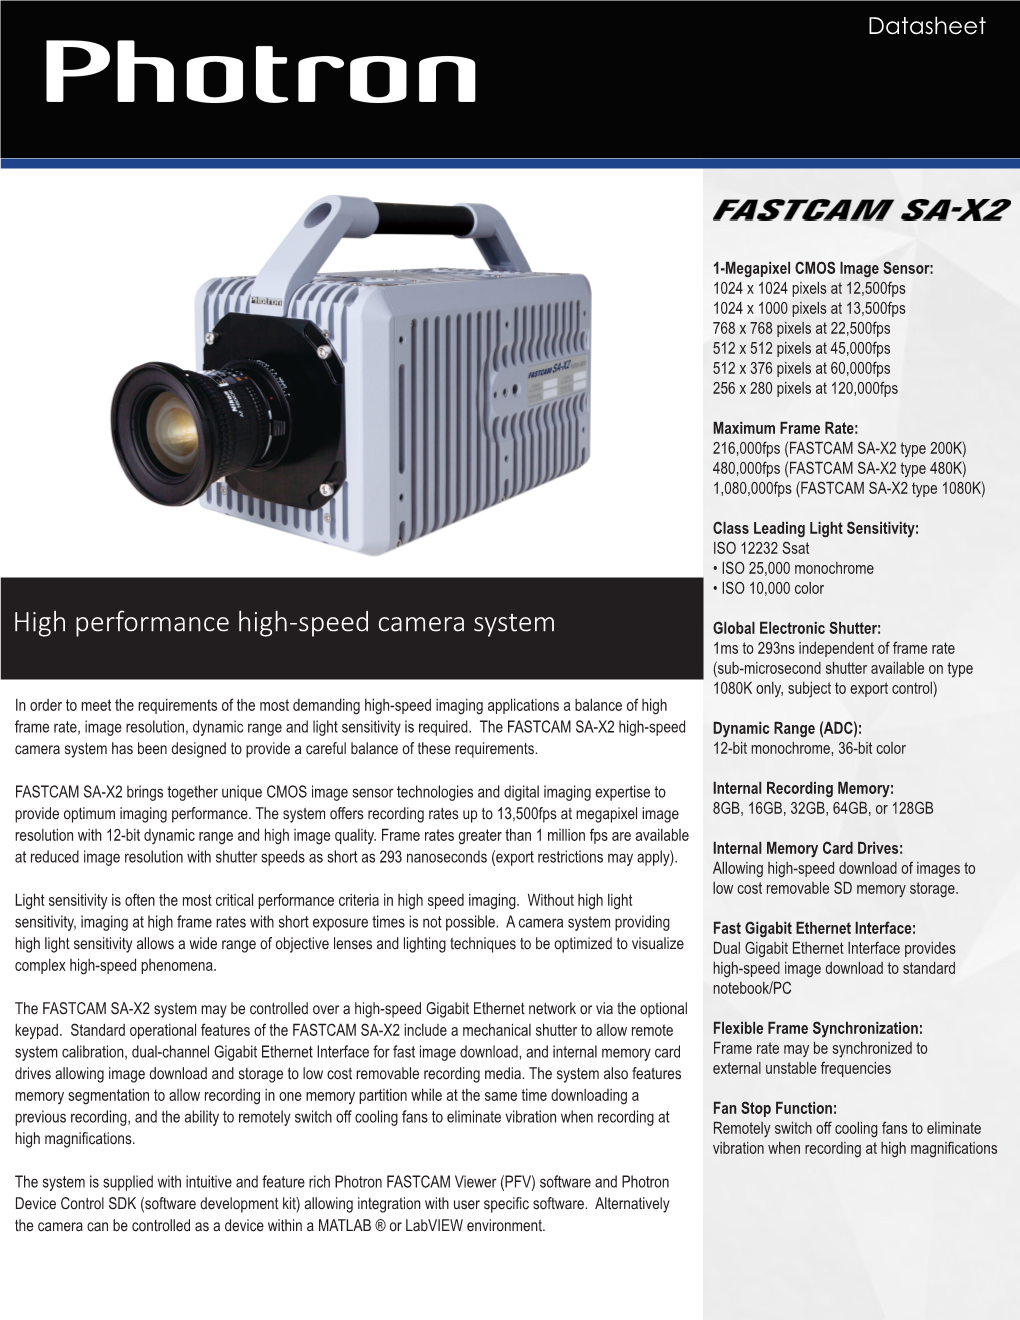 High Performance High-Speed Camera System